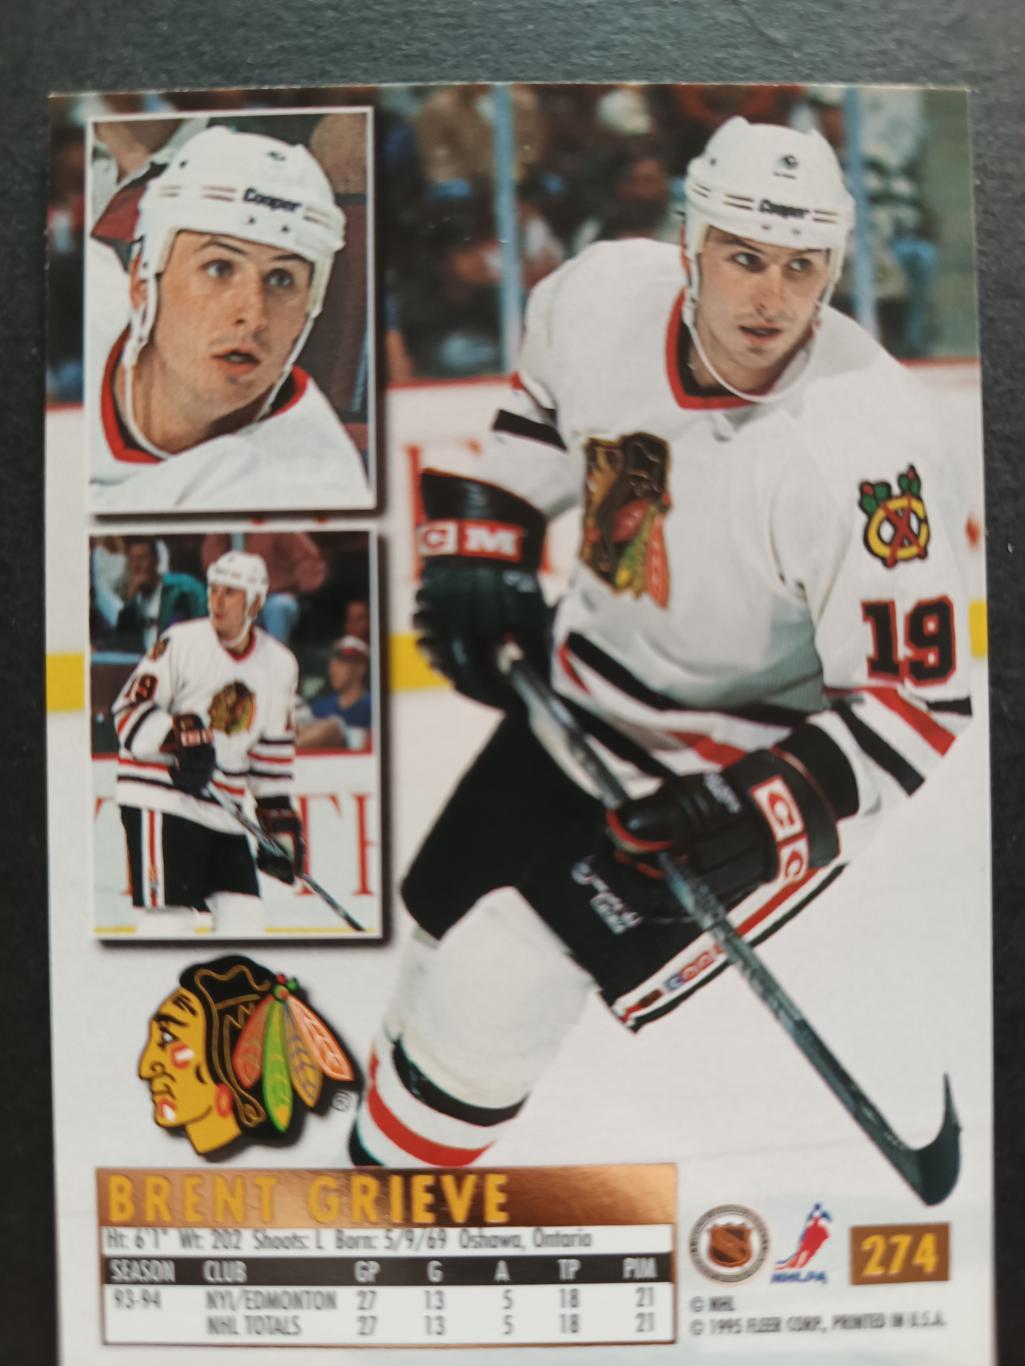 ХОККЕЙ КАРТОЧКА НХЛ FLEER ULTRA 1994-95 NHL BRENT GRIEVE BLACK HAWKS #274 3